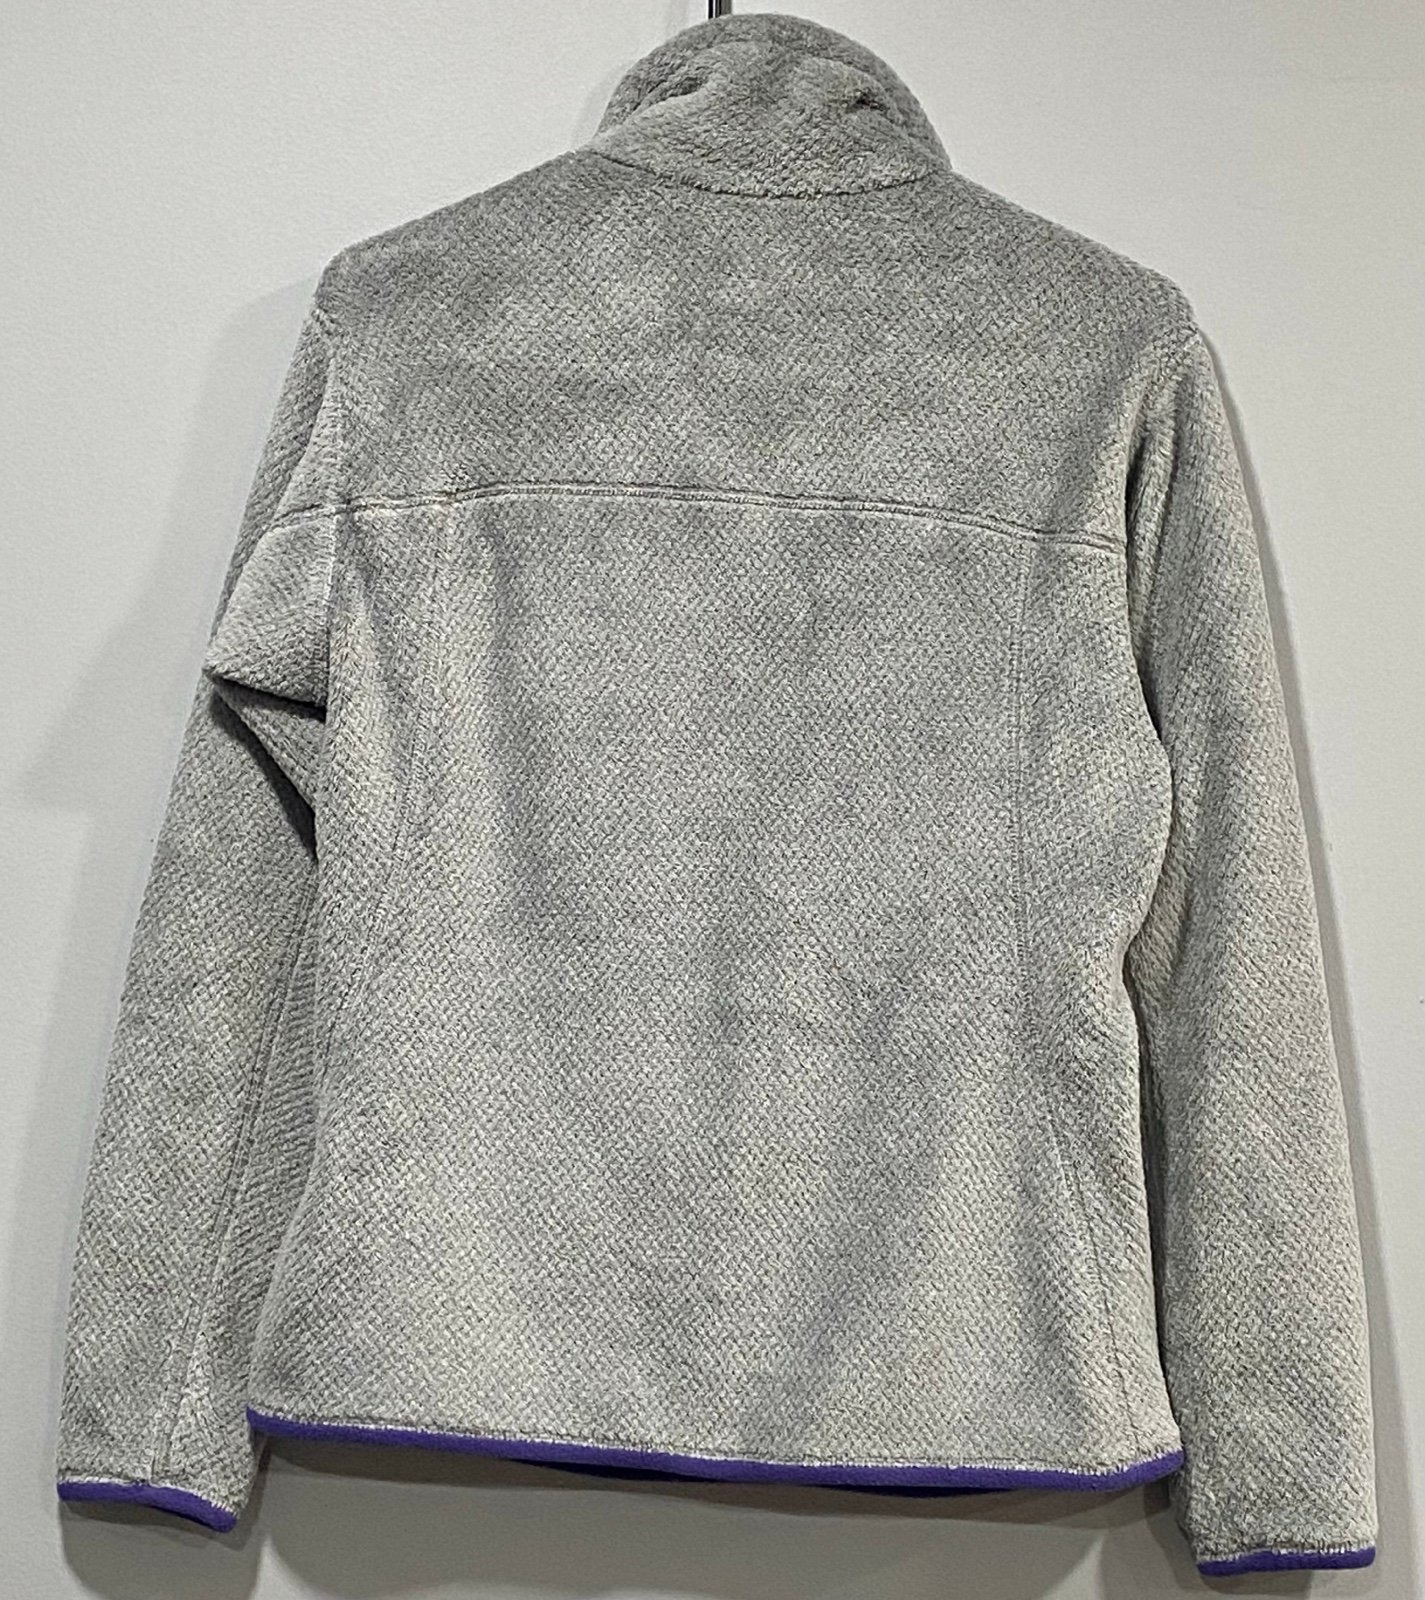 Stylish Patagonia Retool Snap-T Fleece Pullover Womens M Grey Purple 25442 Ka53Rxr78 Online Shop